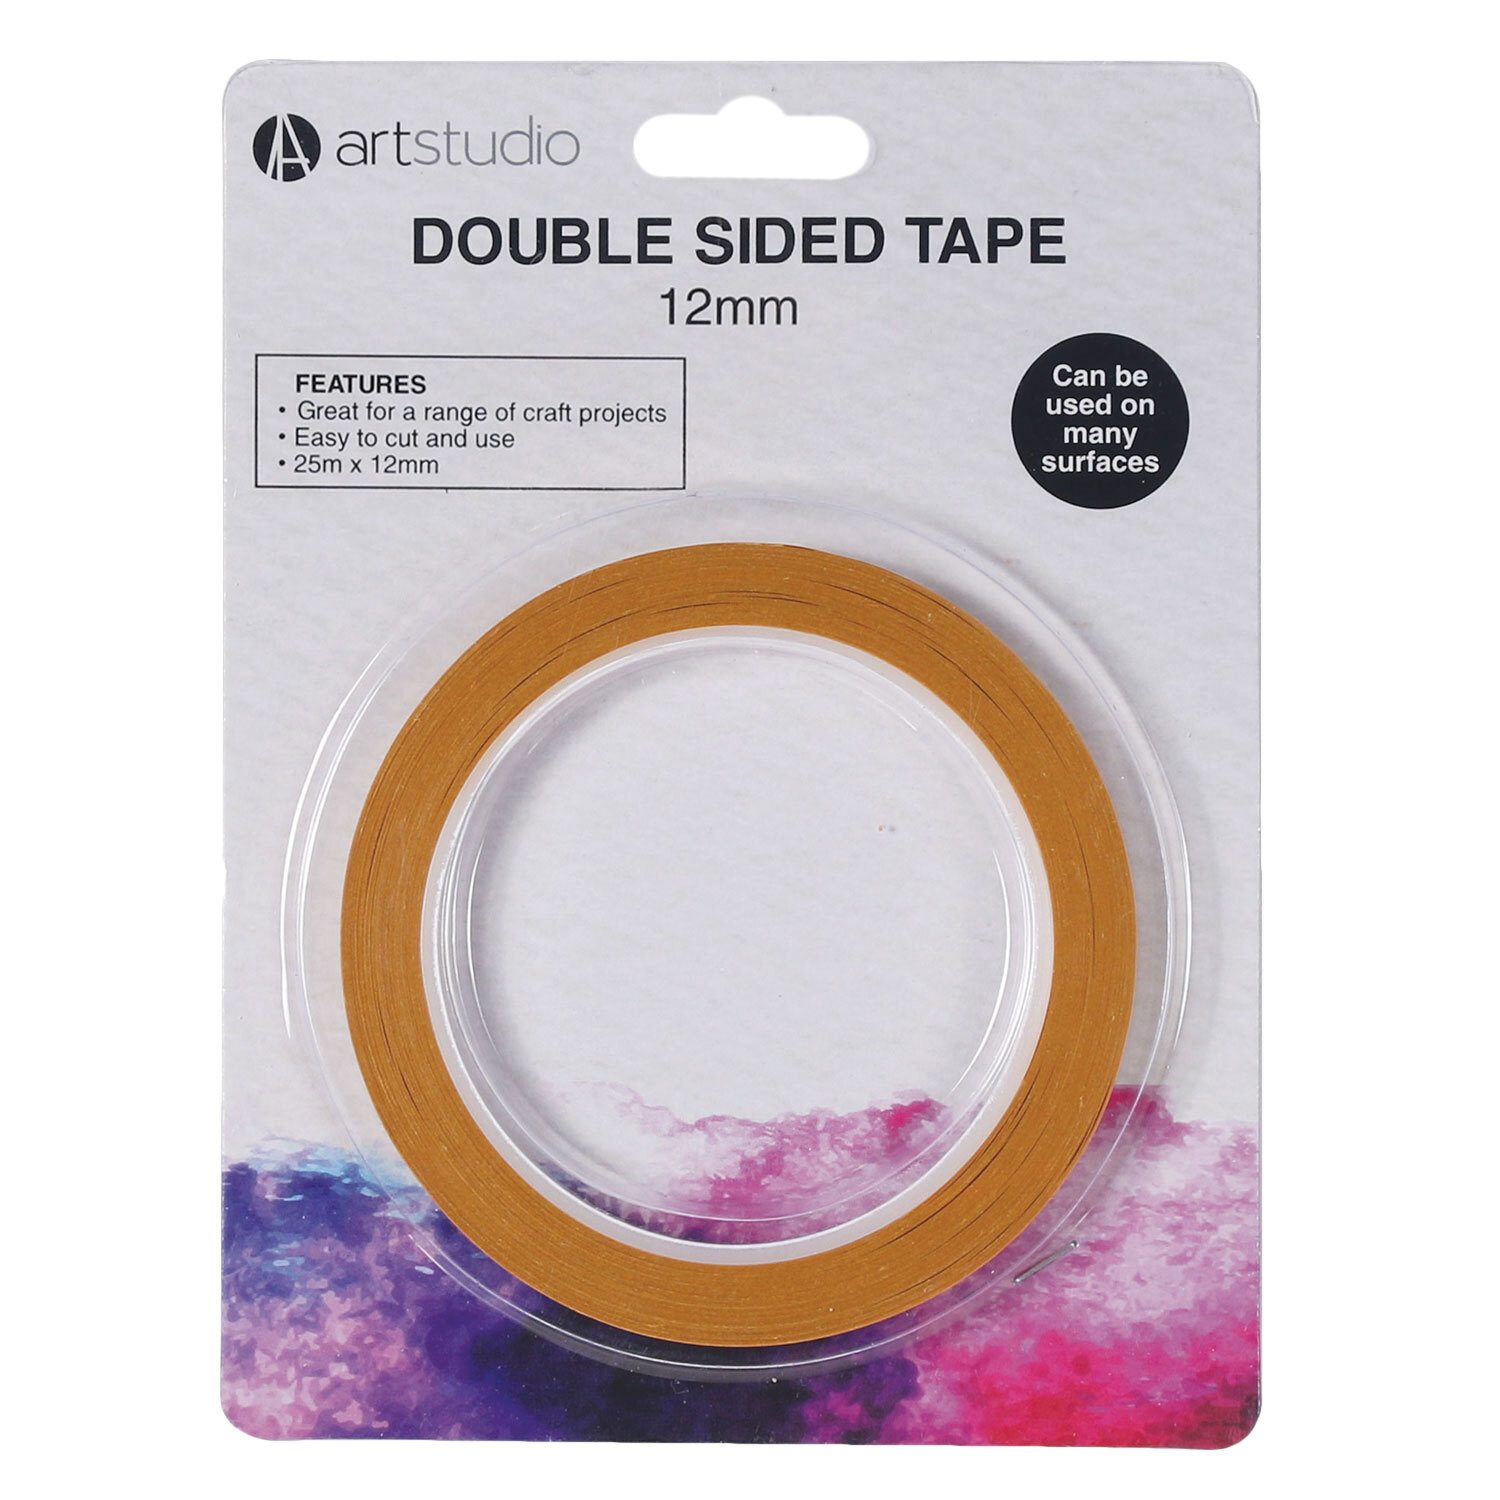 Art Studio Double Sided Tape - 12mm Image